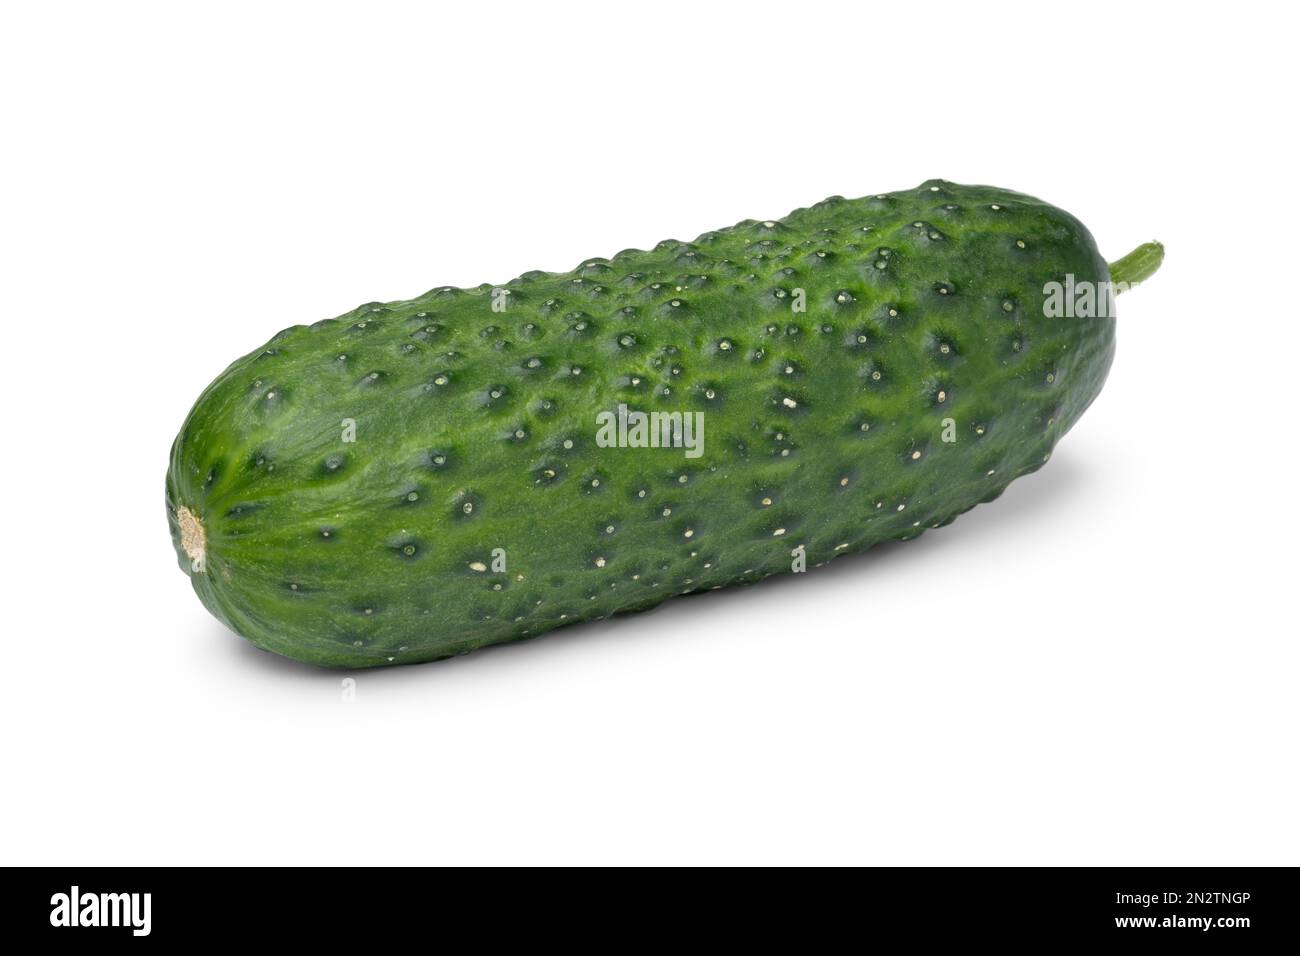 Single whole fresh healthy snack cucumber, Marketmore, close up isolated on white background Stock Photo